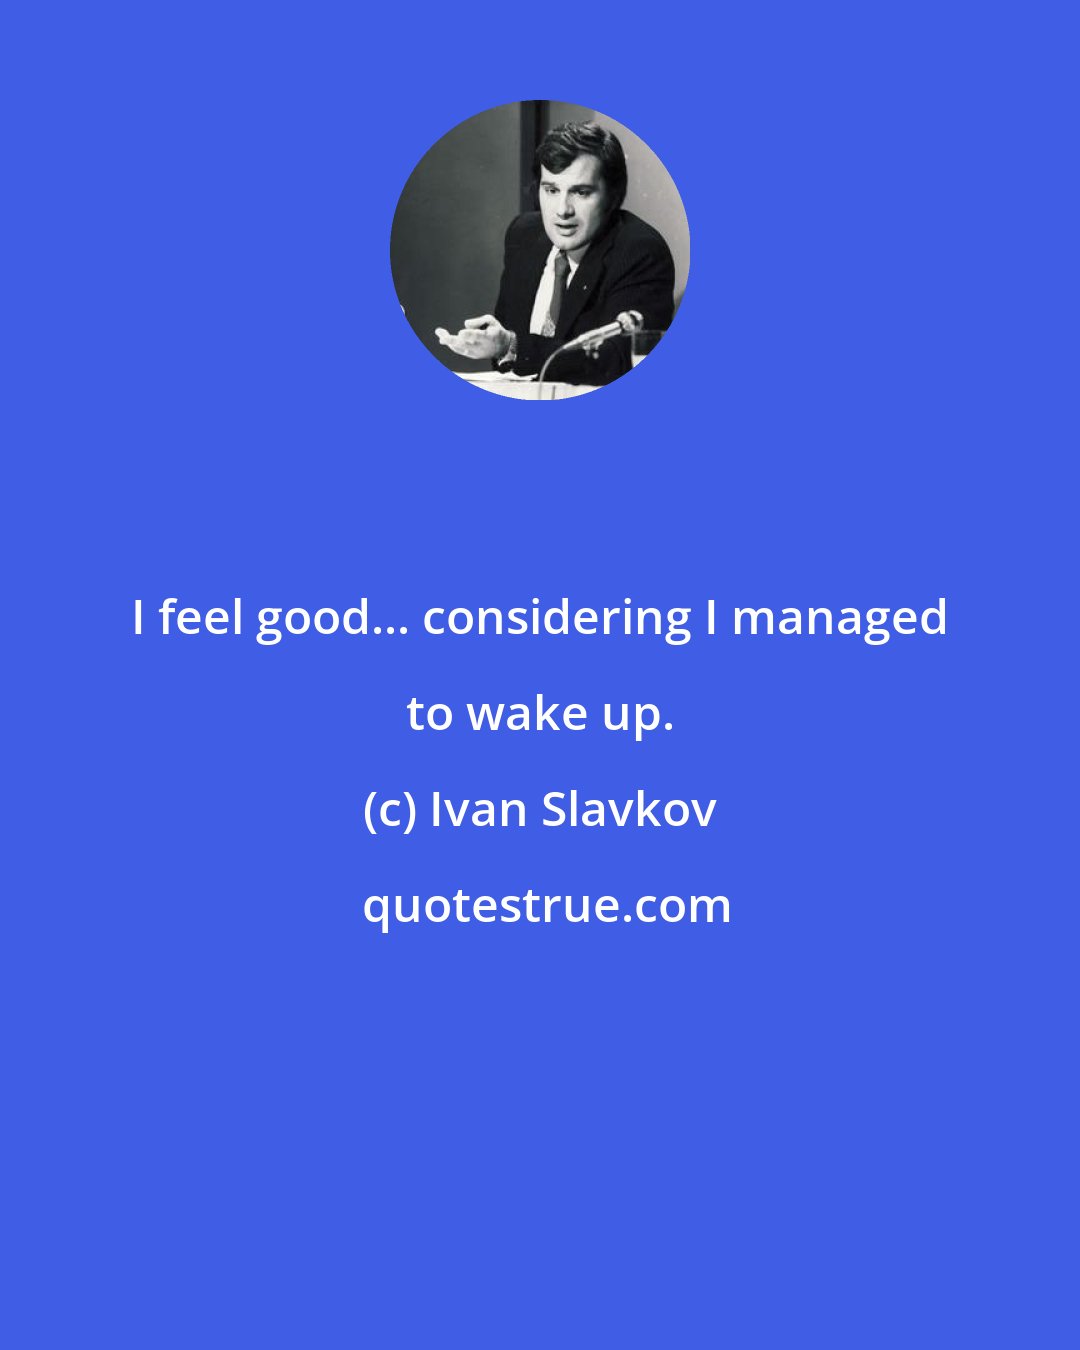 Ivan Slavkov: I feel good... considering I managed to wake up.